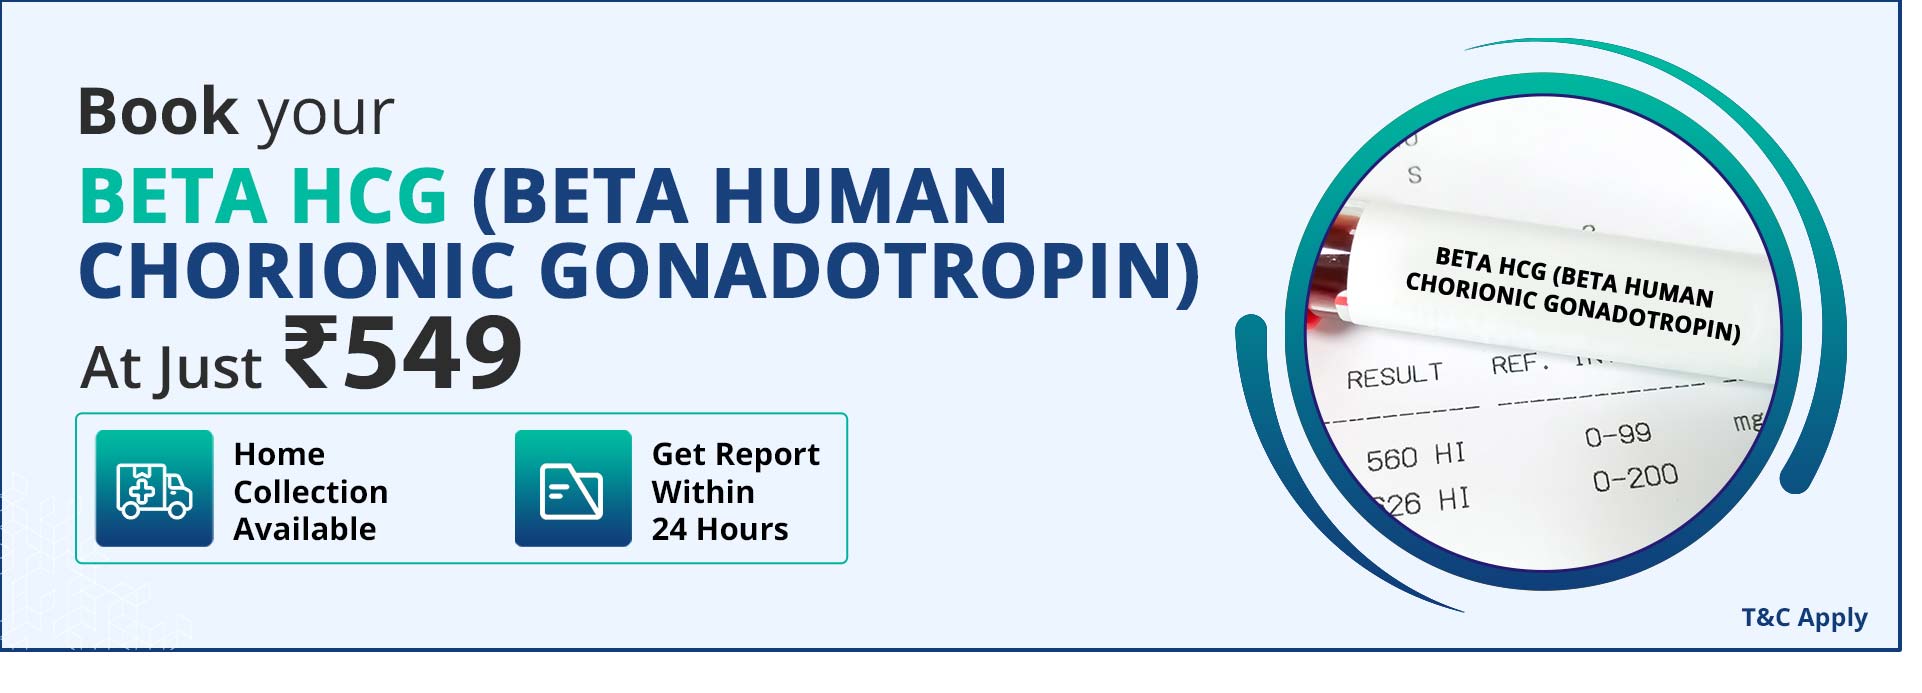 Beta HCG (Beta Human Chorionic Gonadotropin)